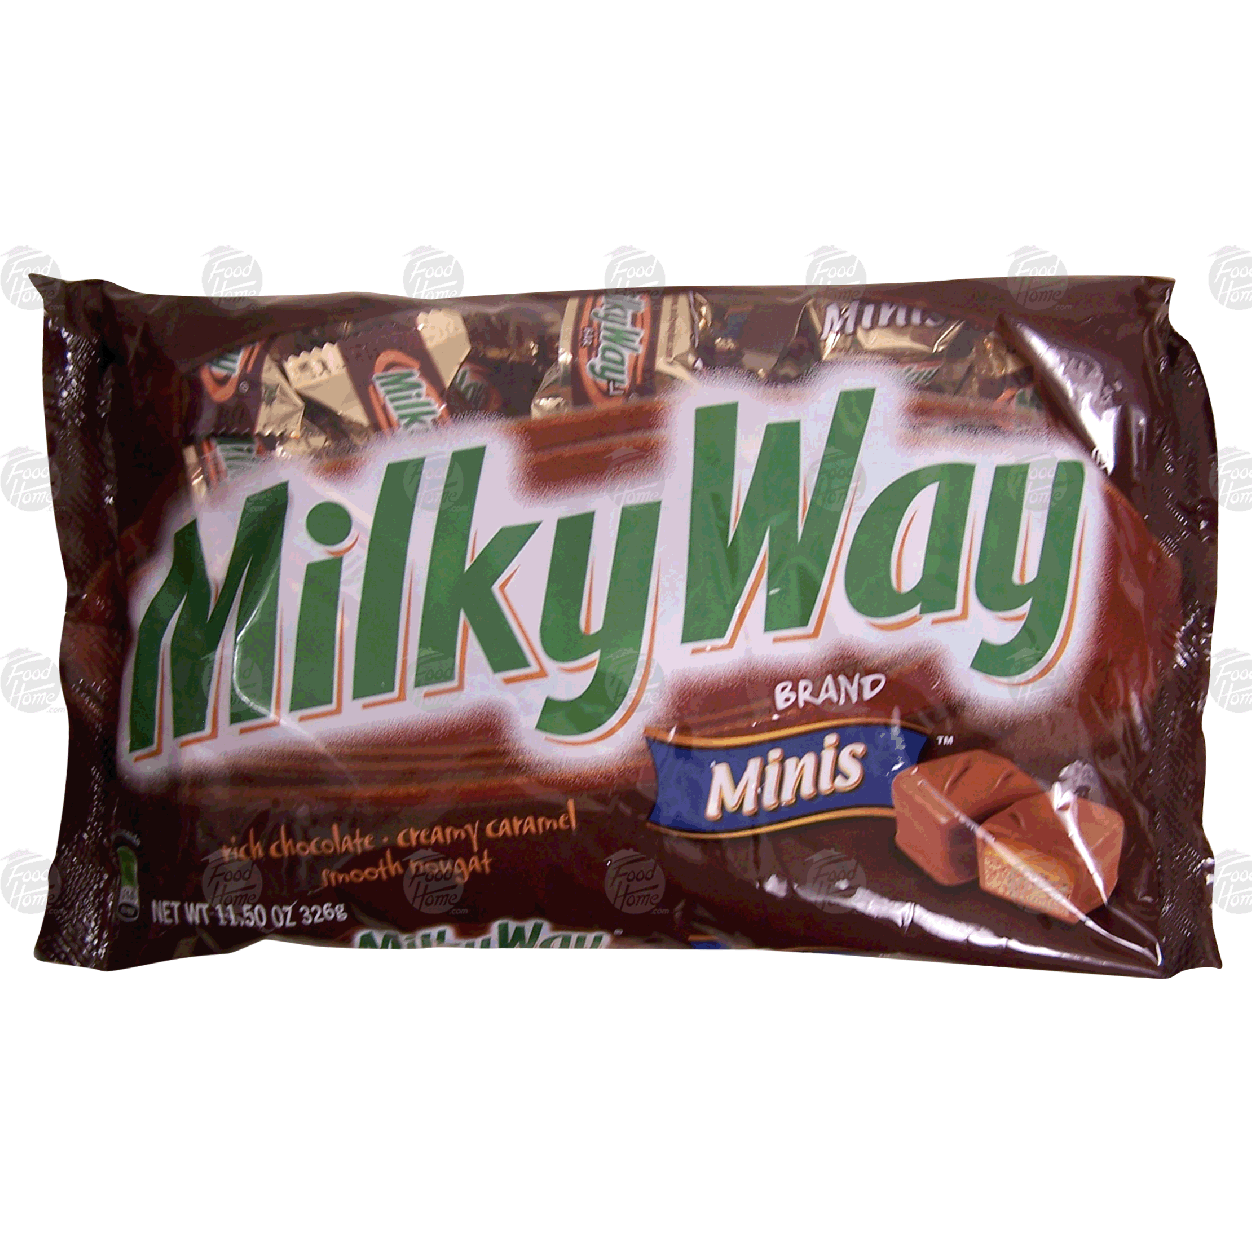 Milky Way(r) Minis rich chocolate, creamy caramel, smooth nougat 11.5oz ...